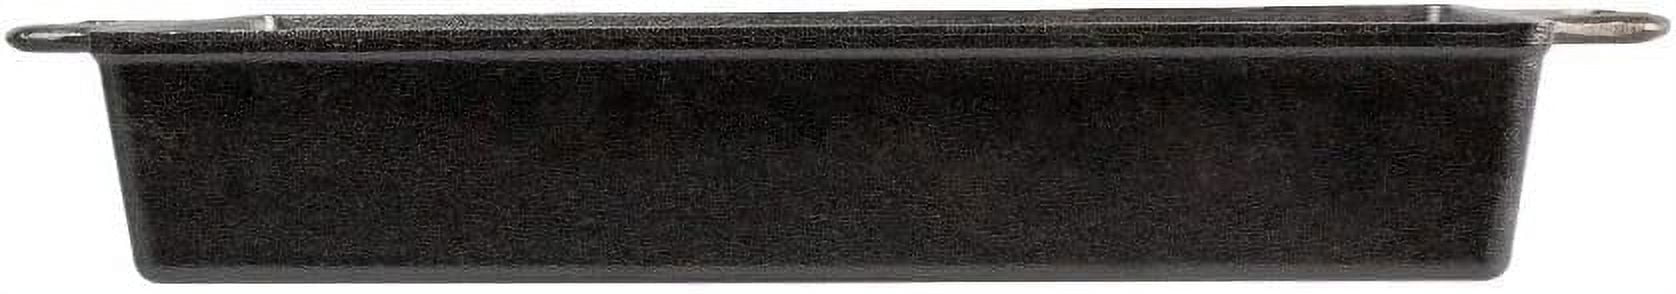 Lodge BW13C 9 x 13 Inch Seasoned Cast Iron Casserole, 9x13 inch, Black 